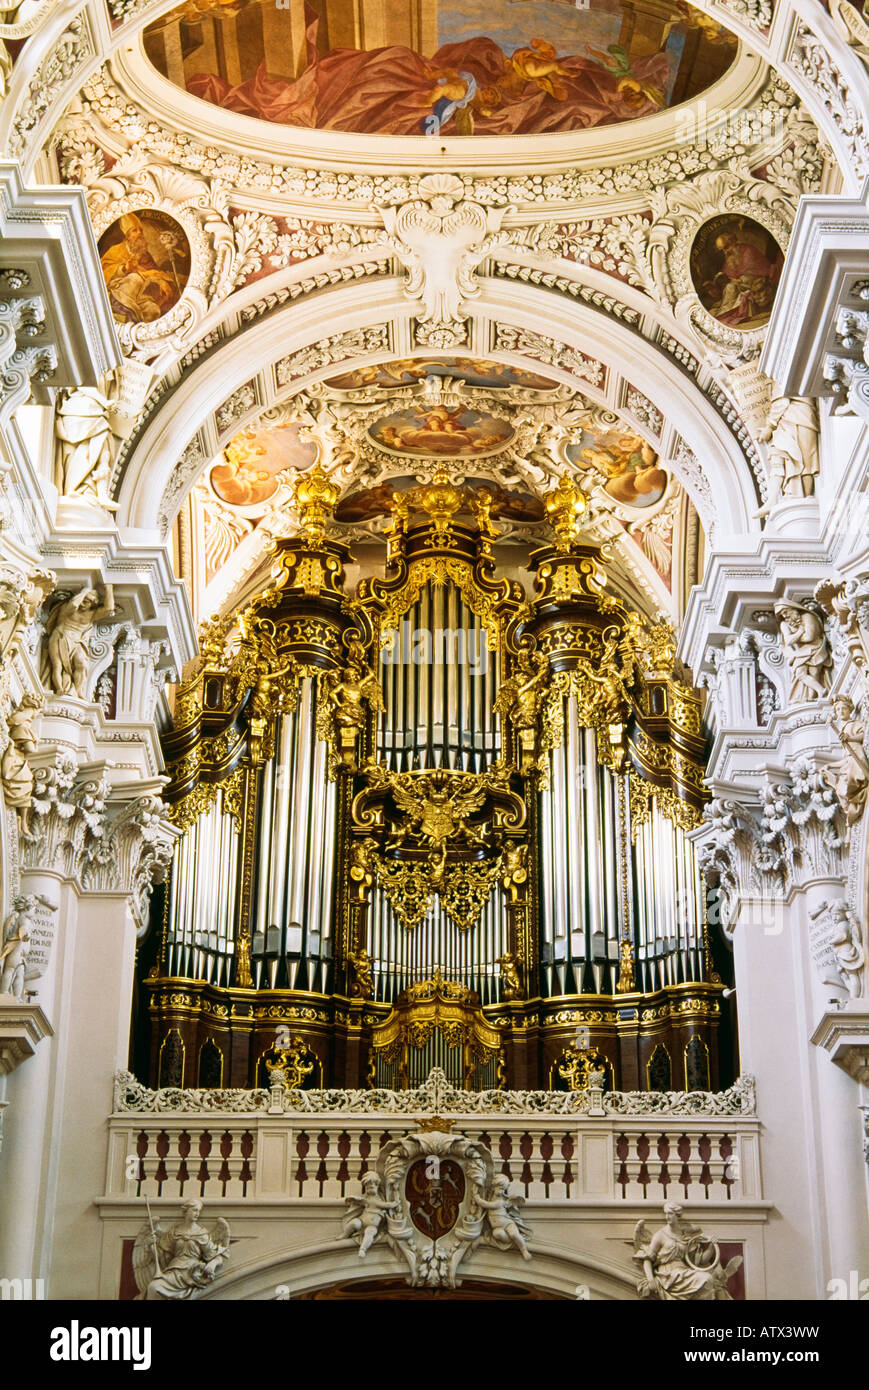 Pipe organ in Passau Cathedral, Passau, Bavaria, Germany Stock Photo